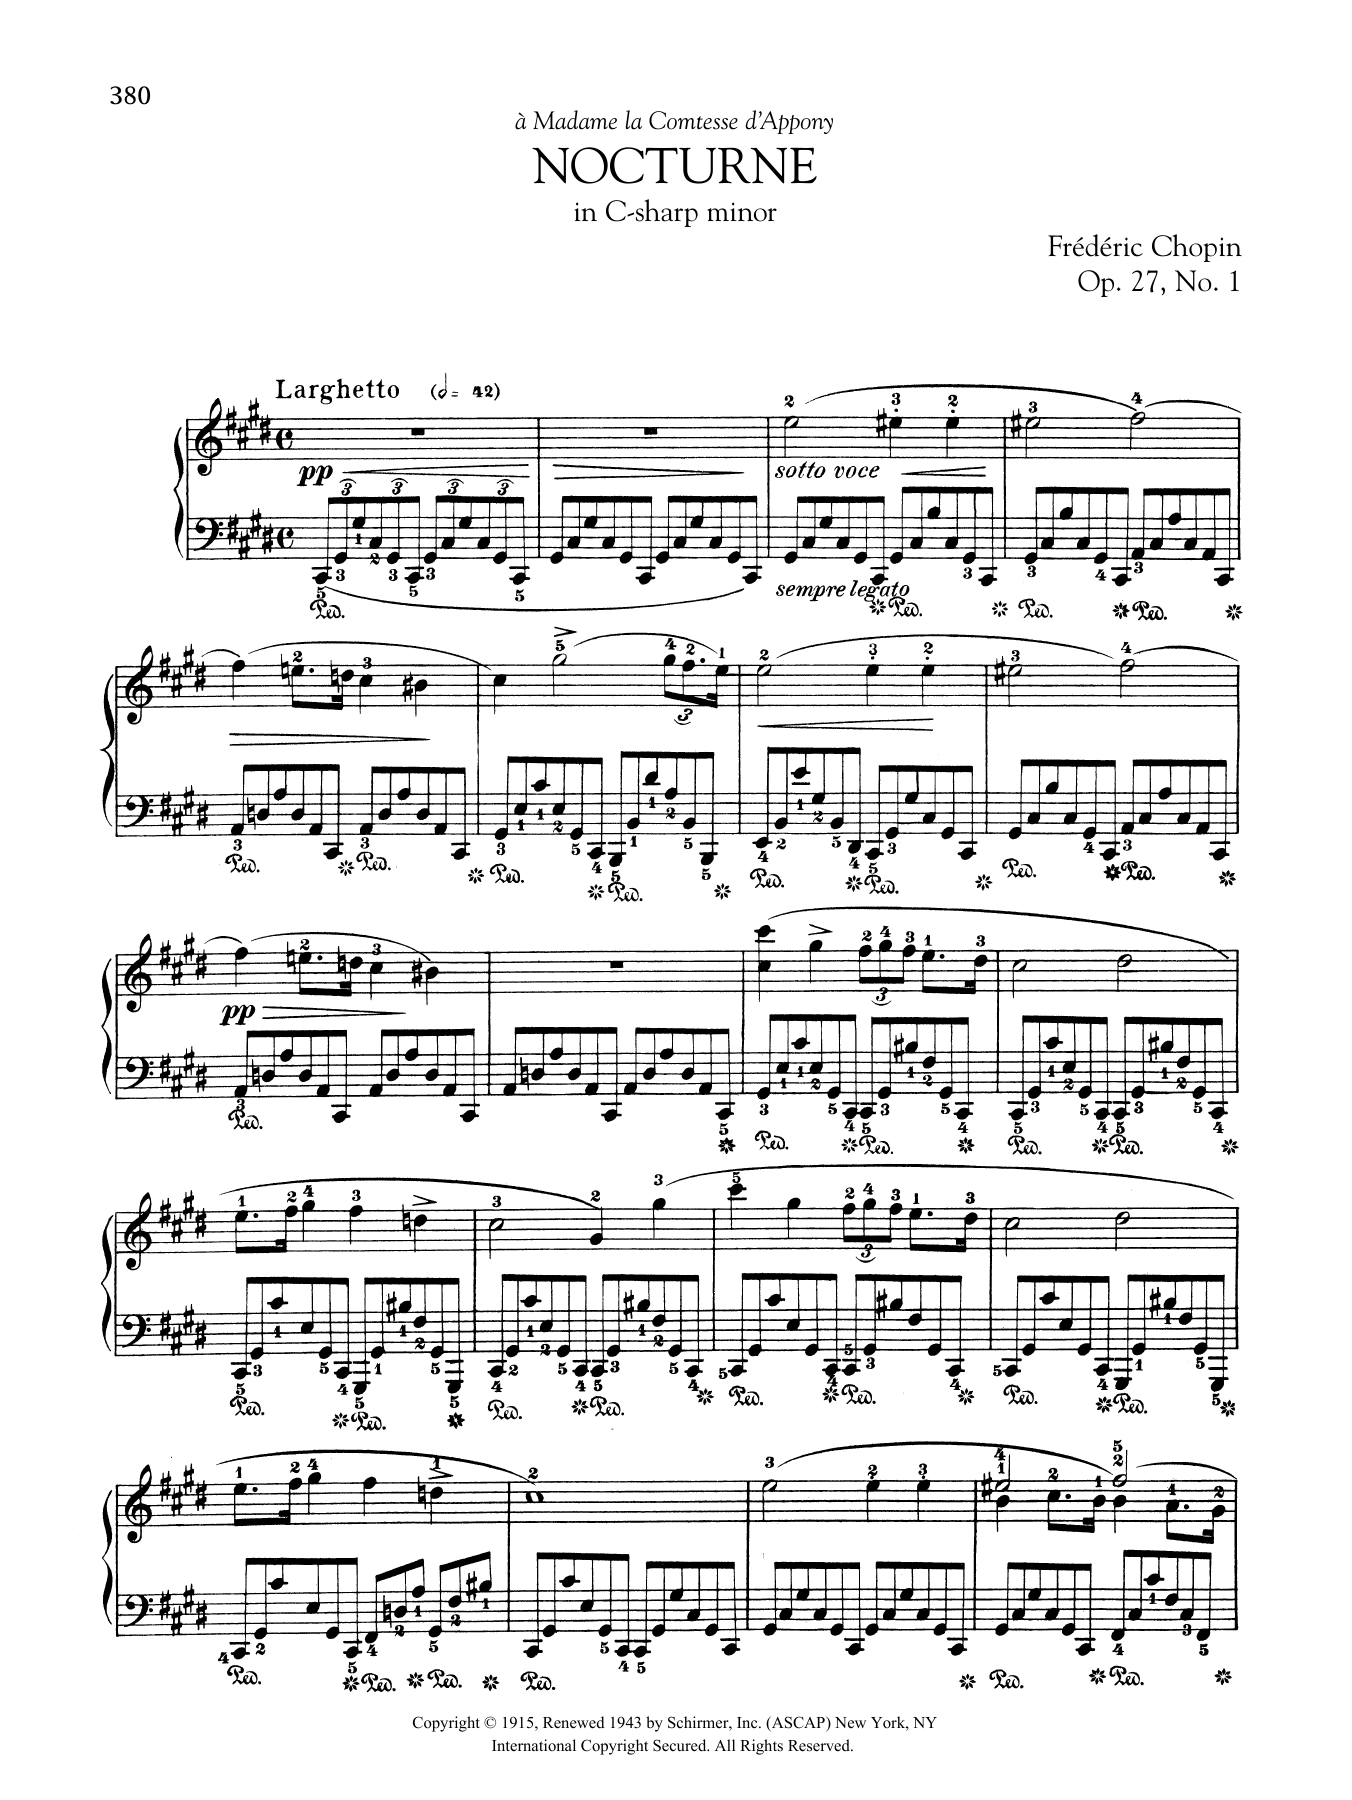 Nocturne in C-sharp minor, Op. 27, No. 1 sheet music